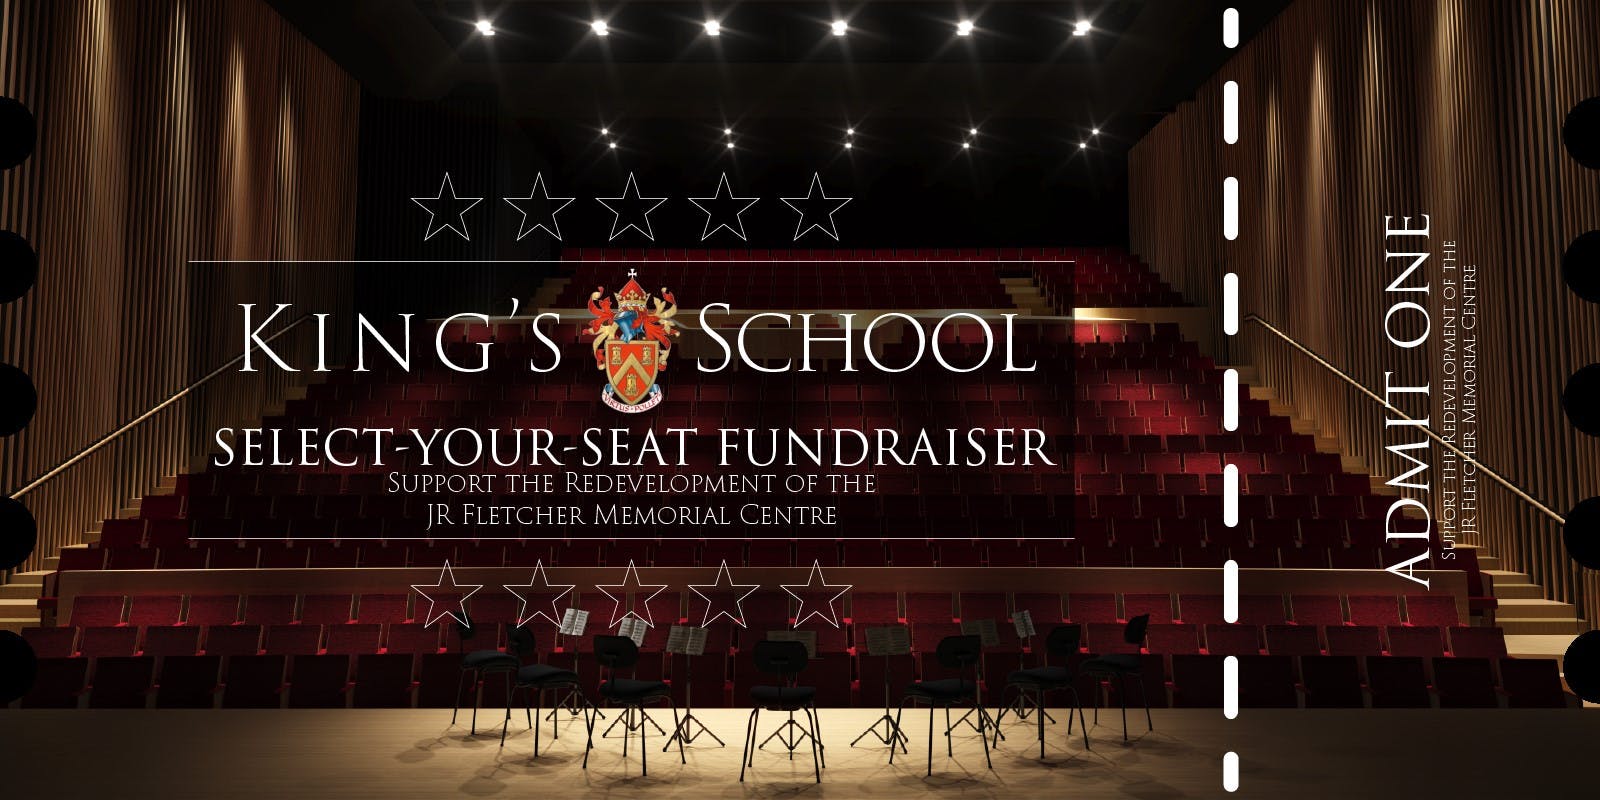 Select-Your-Seat Fundraiser: JR Fletcher Memorial Centre